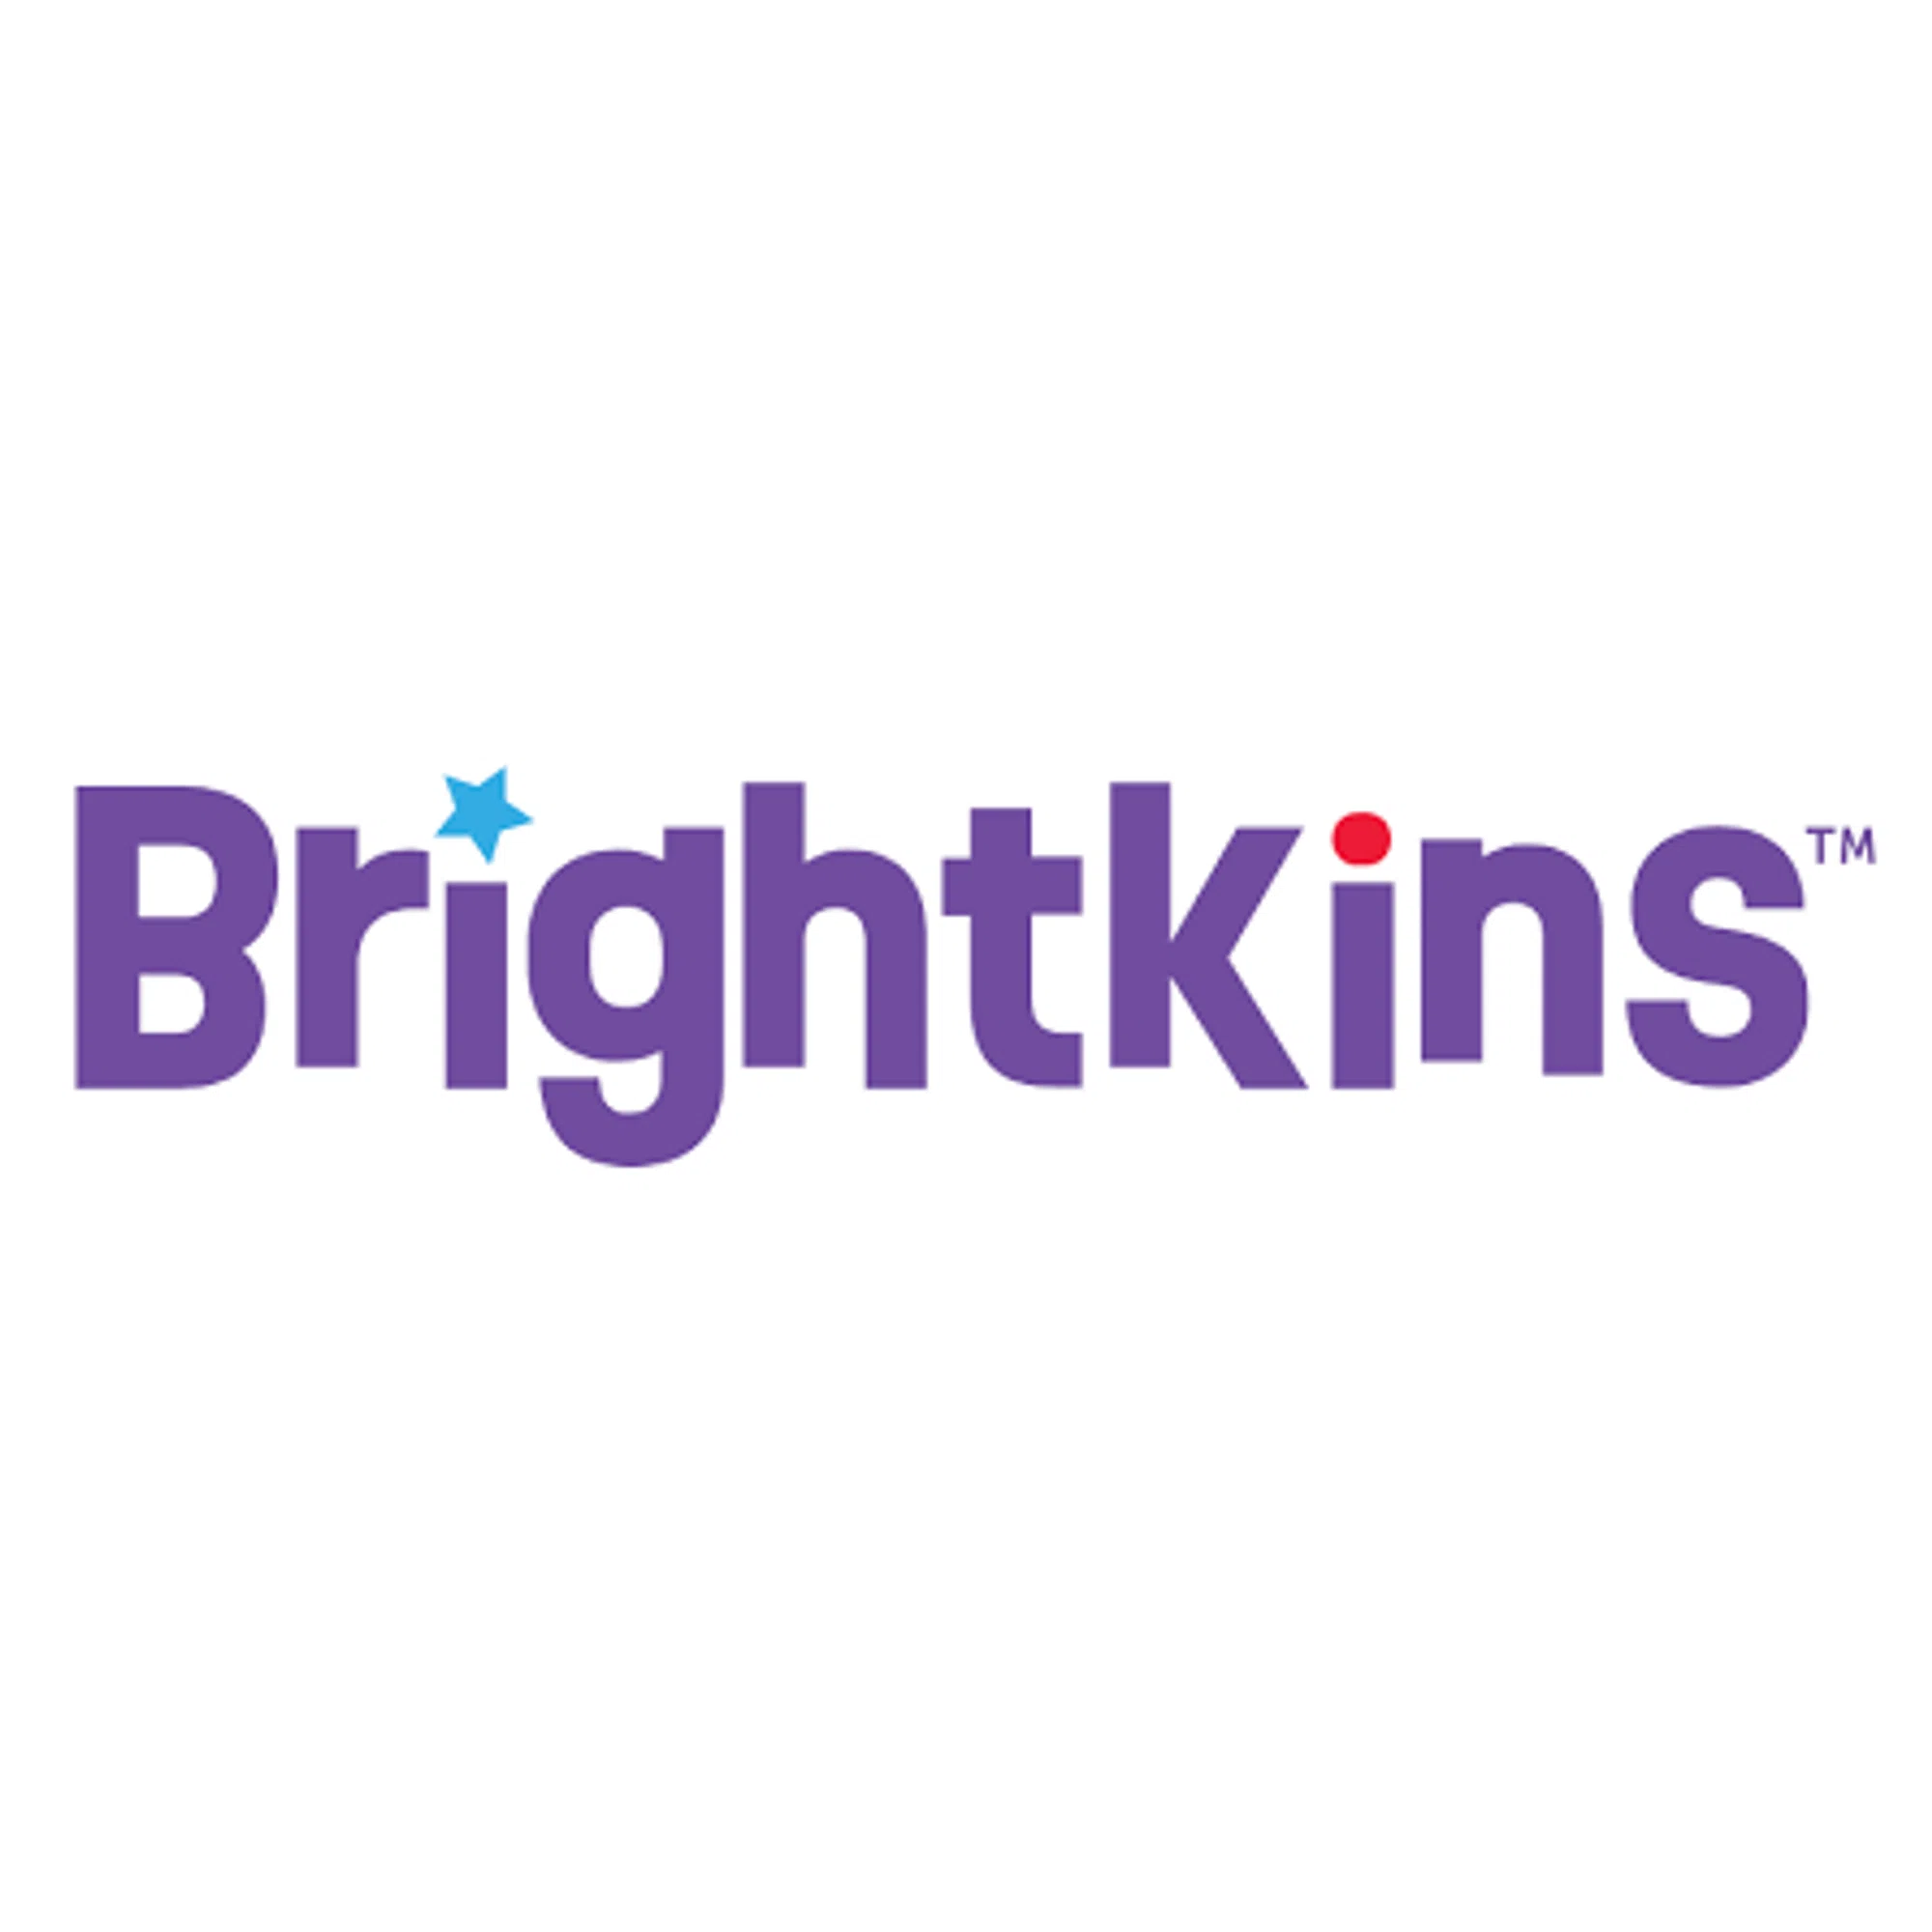 Brightkins